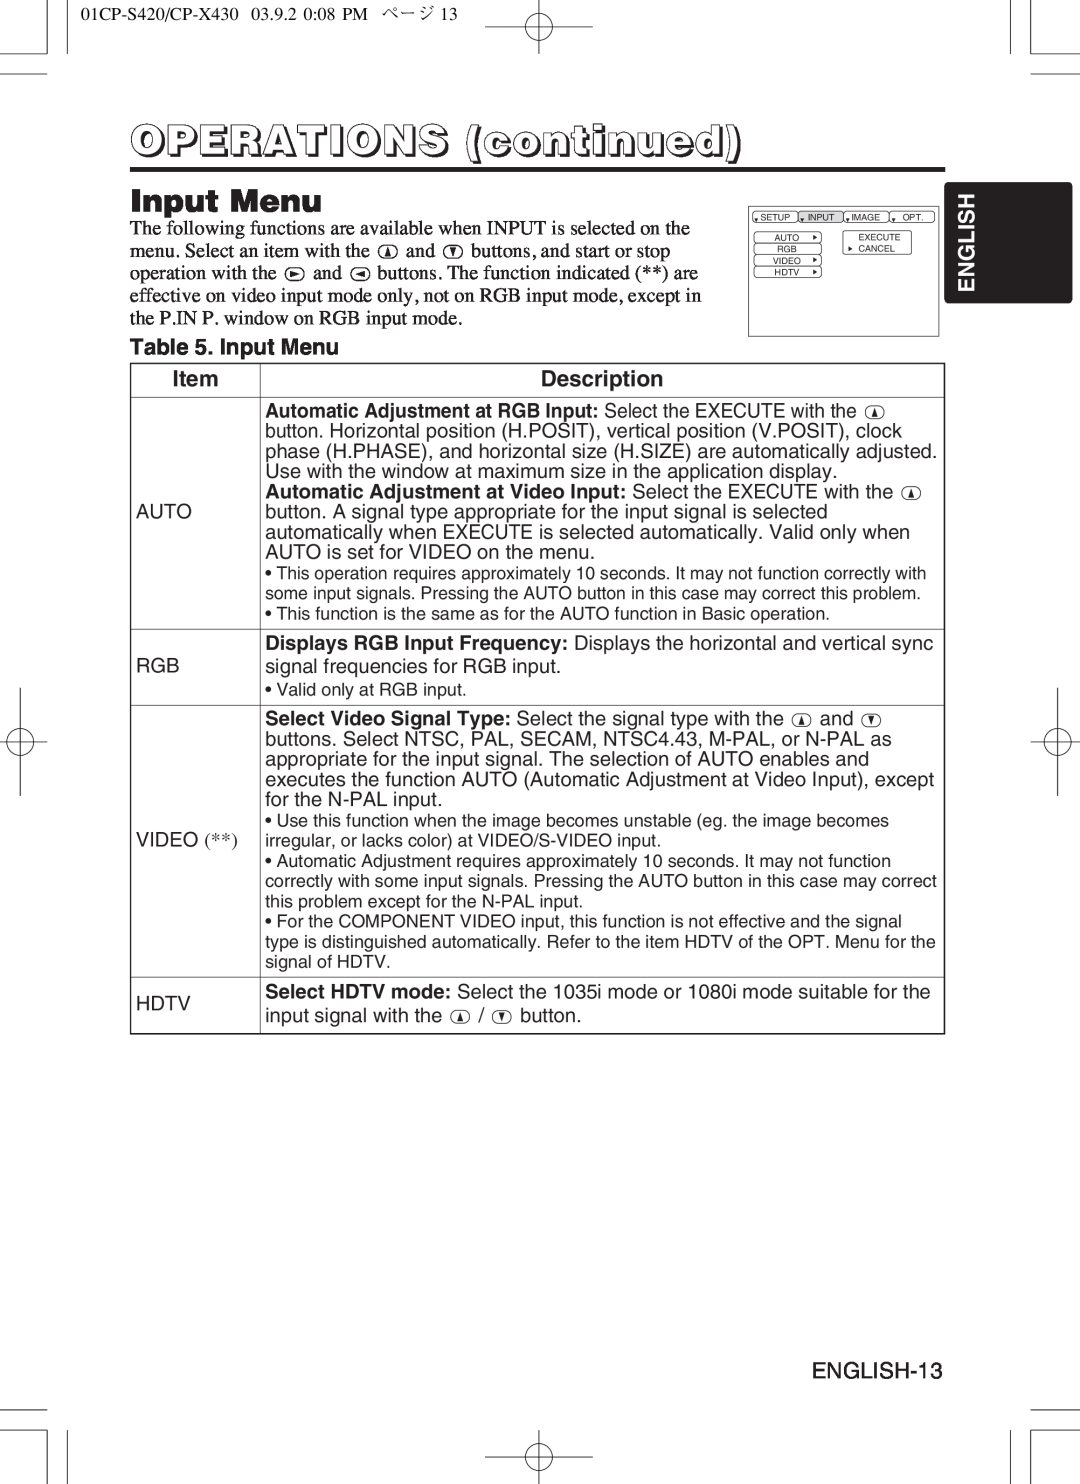 Hitachi CP-X430WA, CP-S420WA user manual Input Menu, OPERATIONS continued, English, Item, Description 